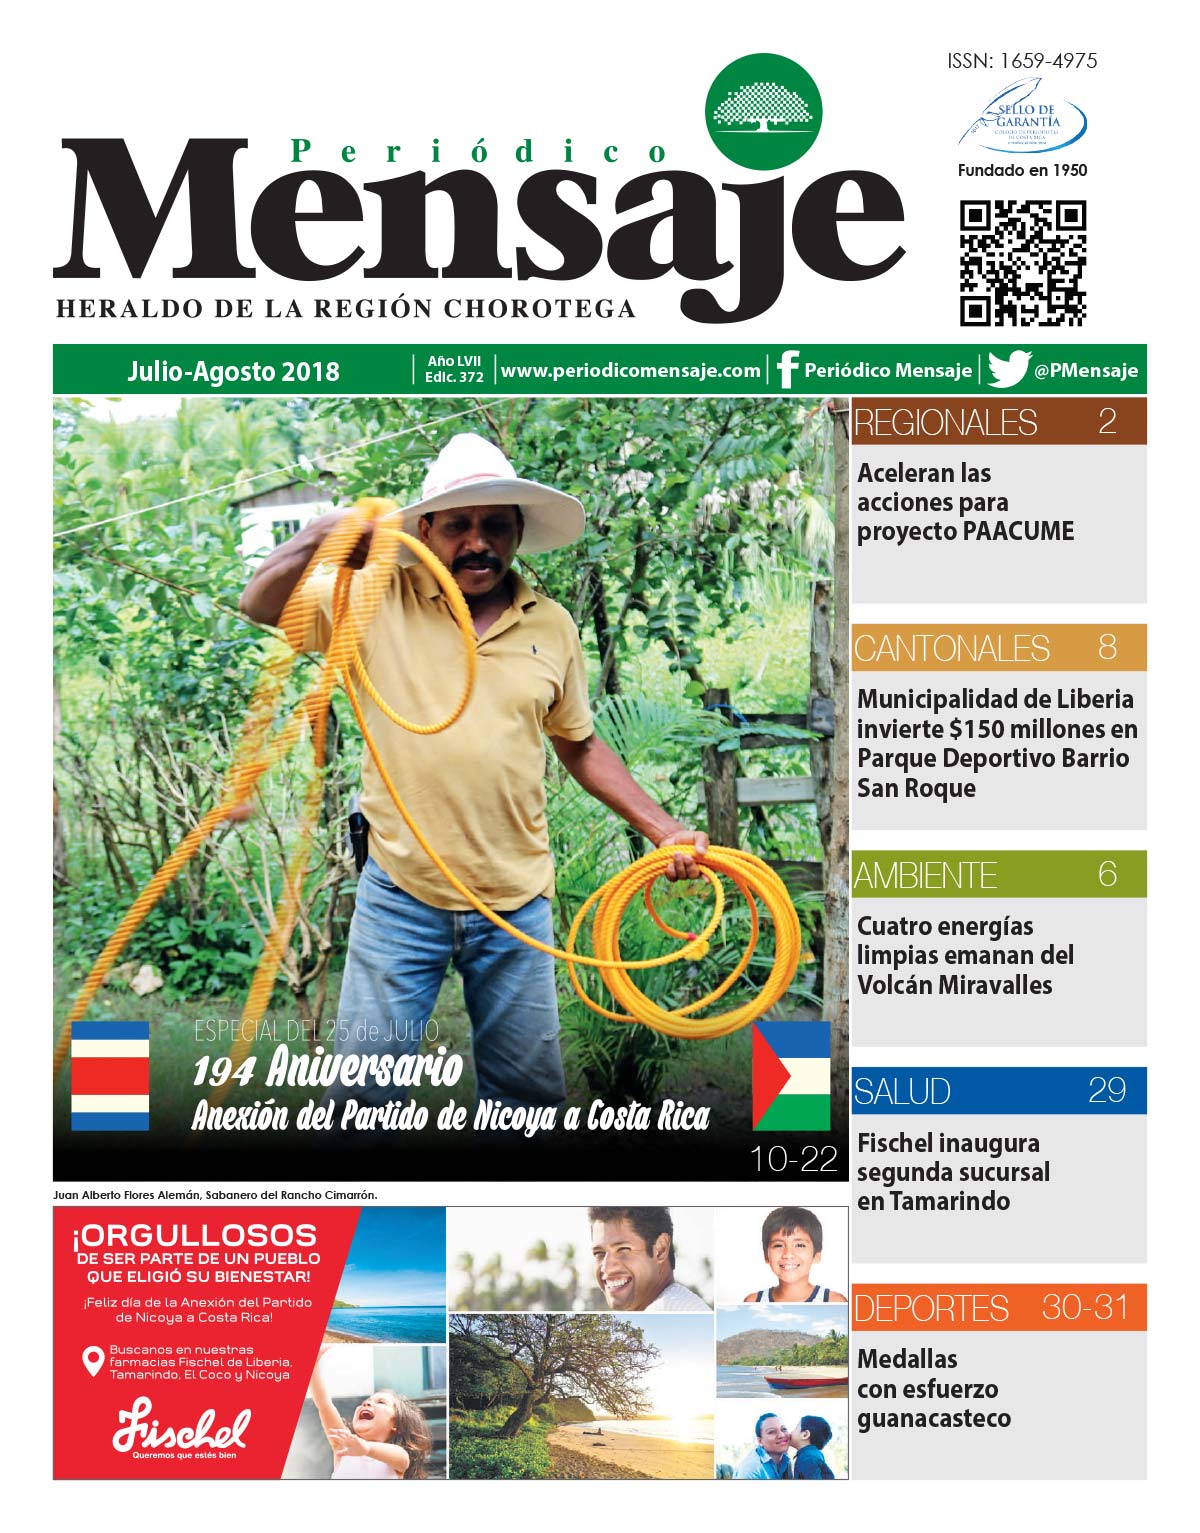 Portada Edicion julio-agosto 2018, Periodico Mensaje, Guanacaste